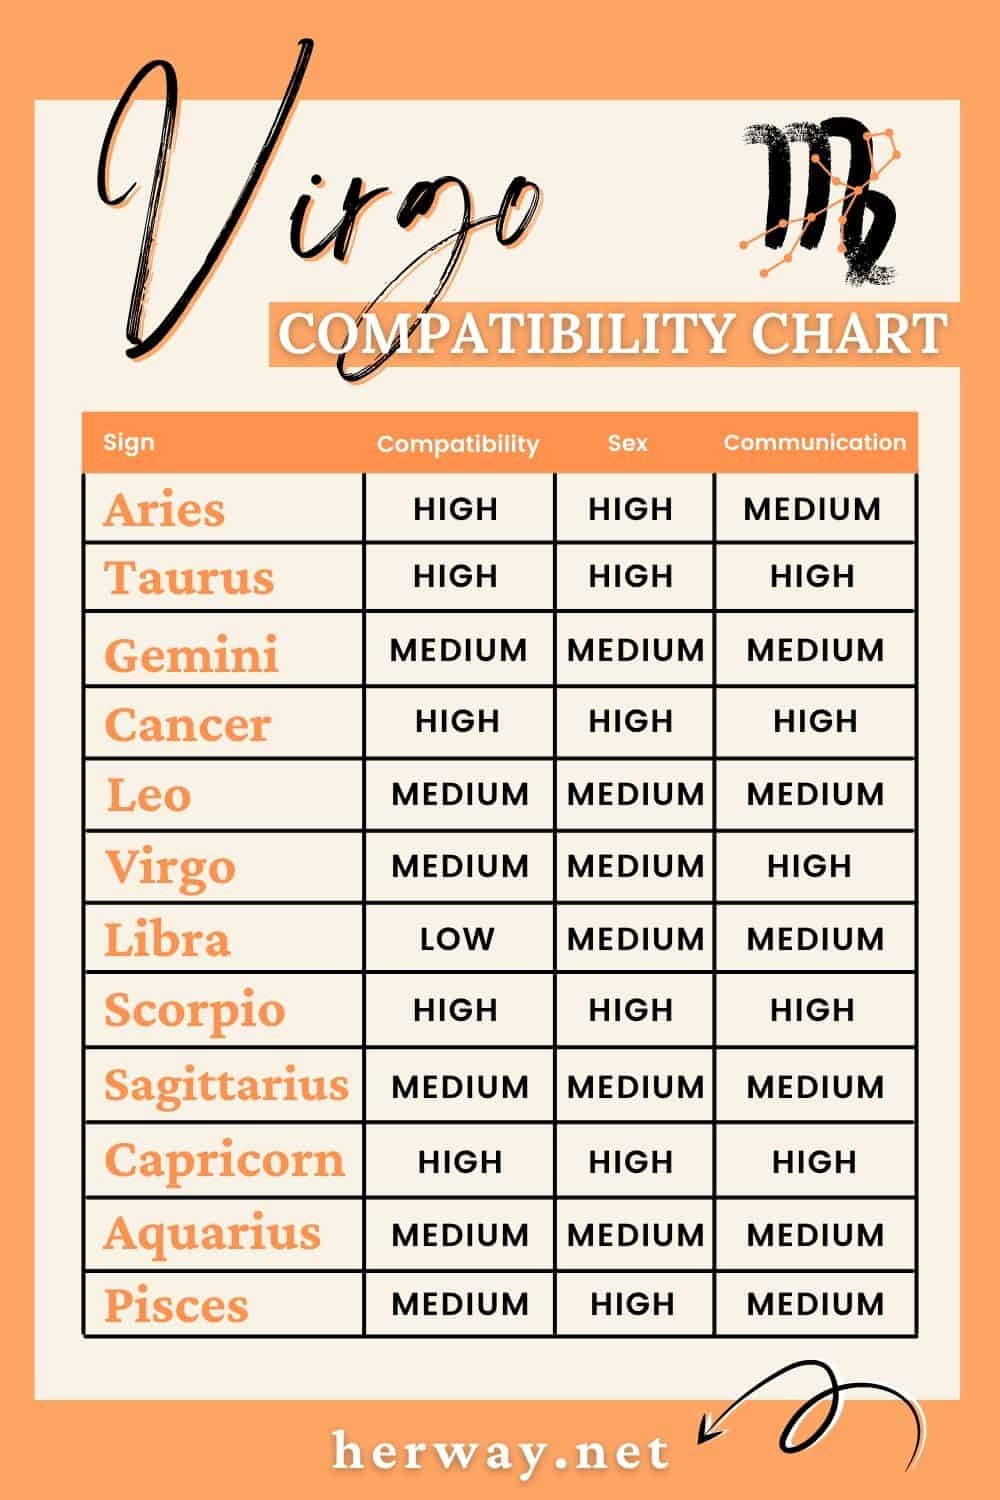 virgo compatibility chart